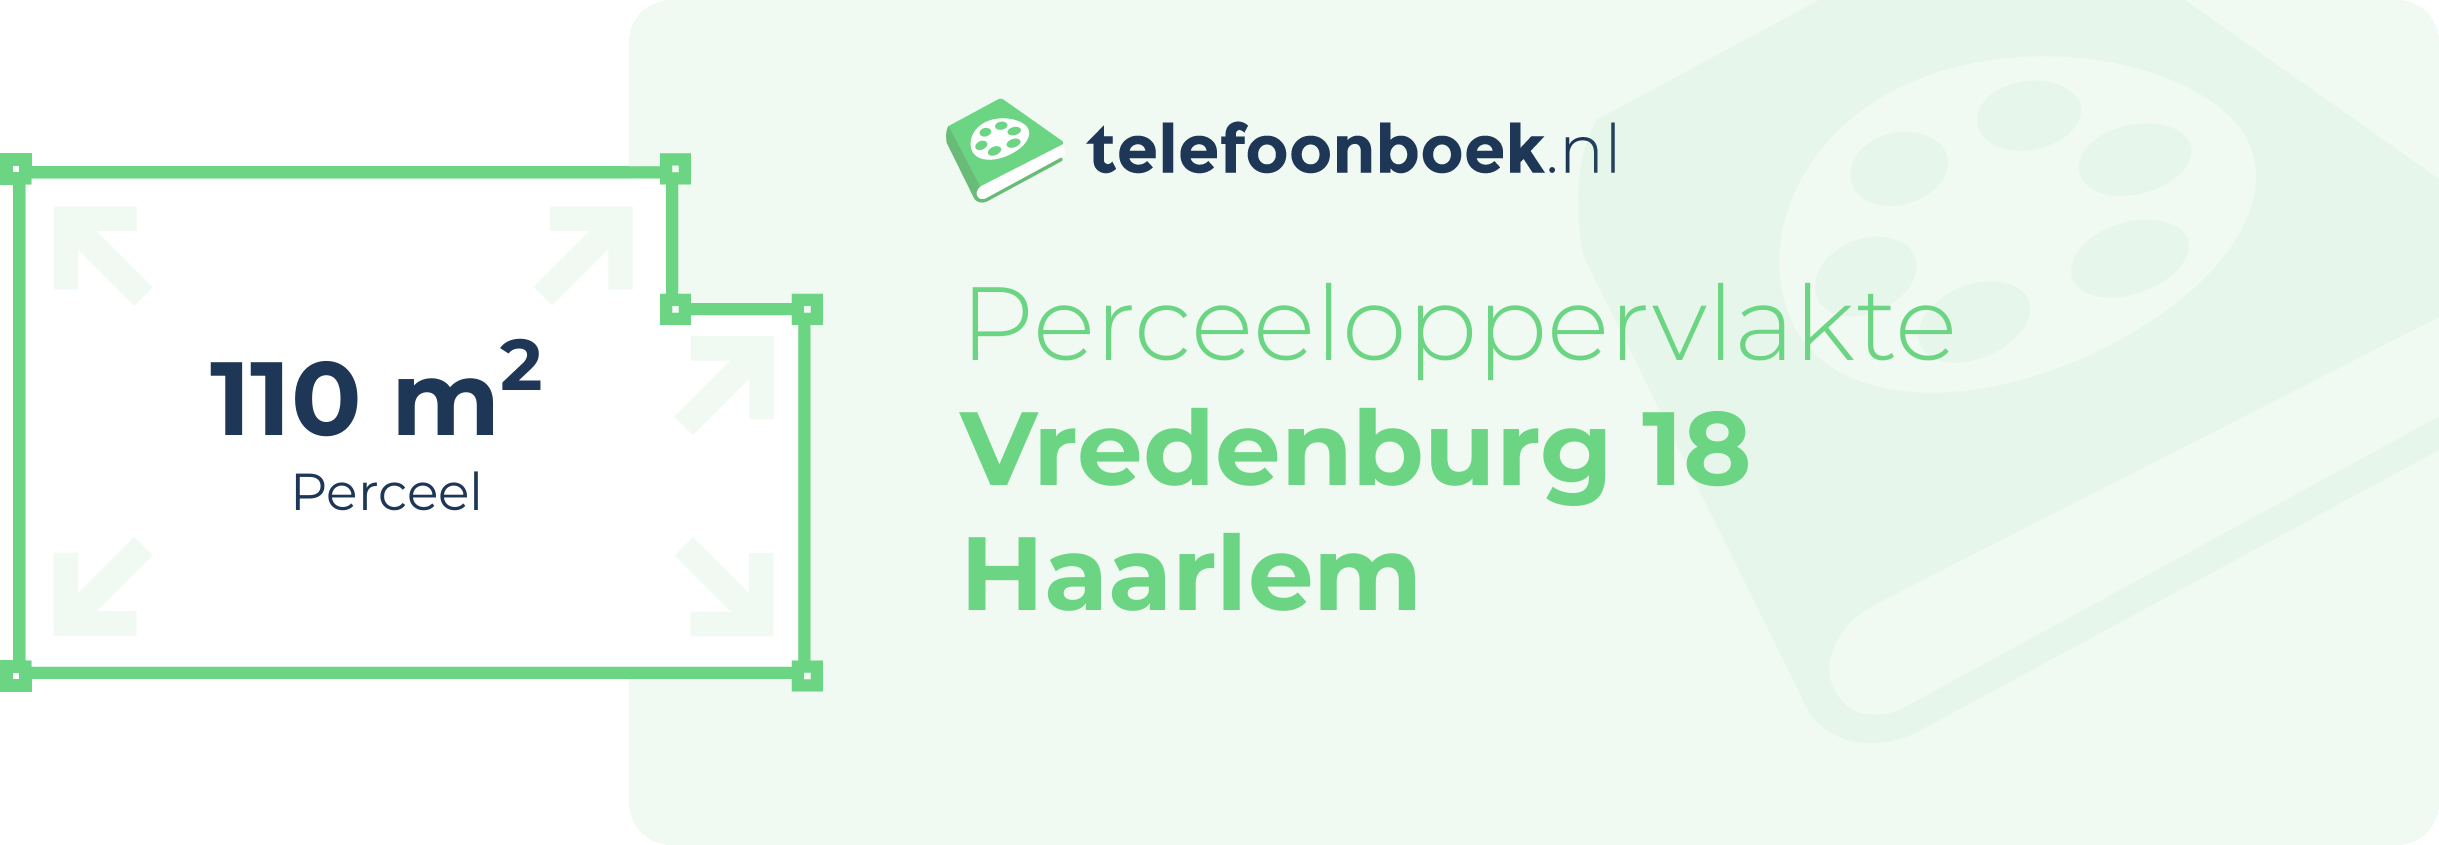 Perceeloppervlakte Vredenburg 18 Haarlem